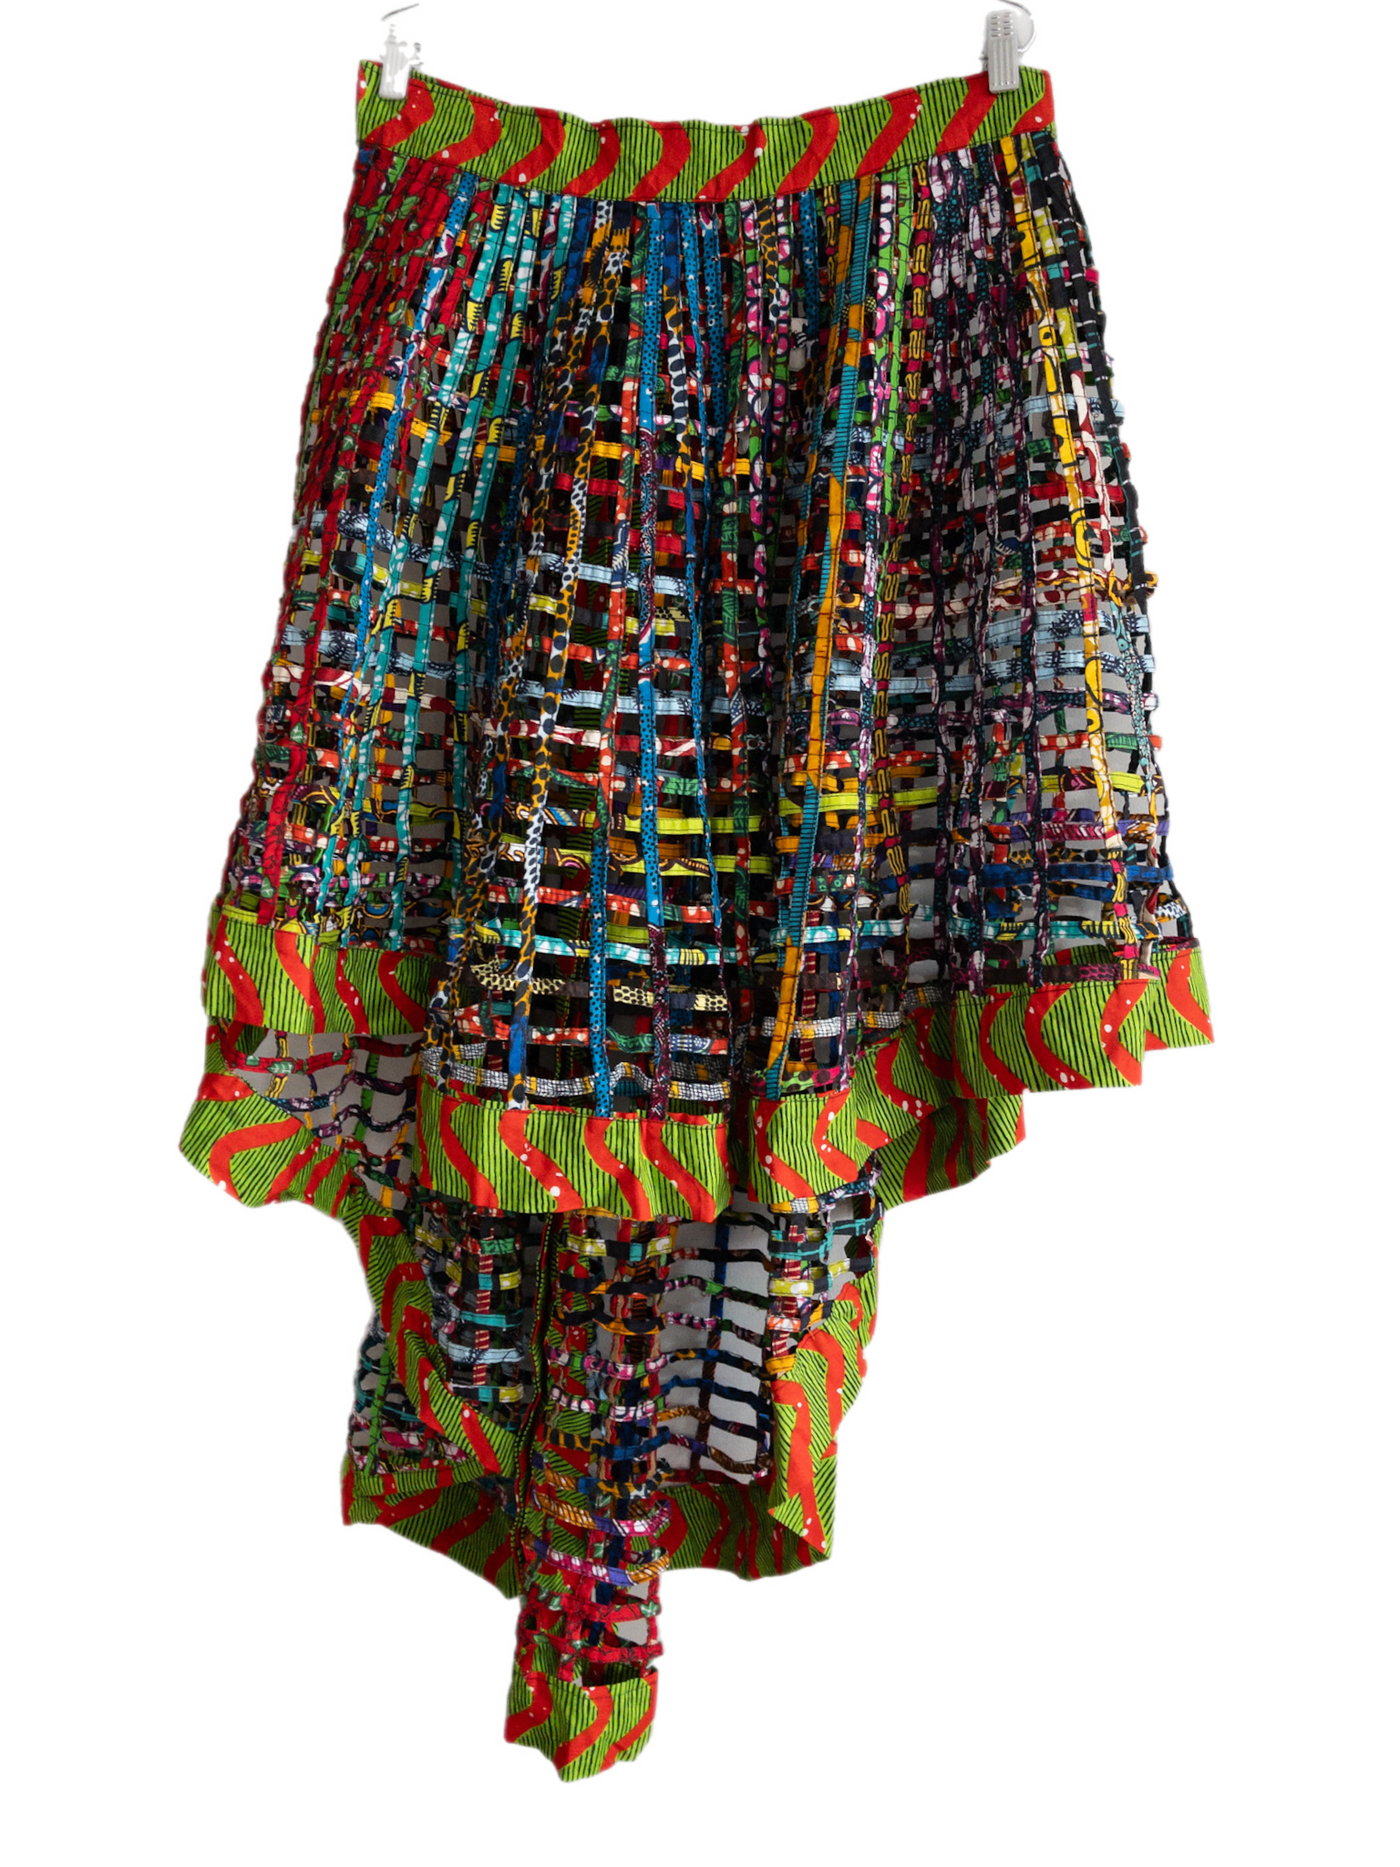 Ankara  Laced Skirt High-Low - Trufacebygrace